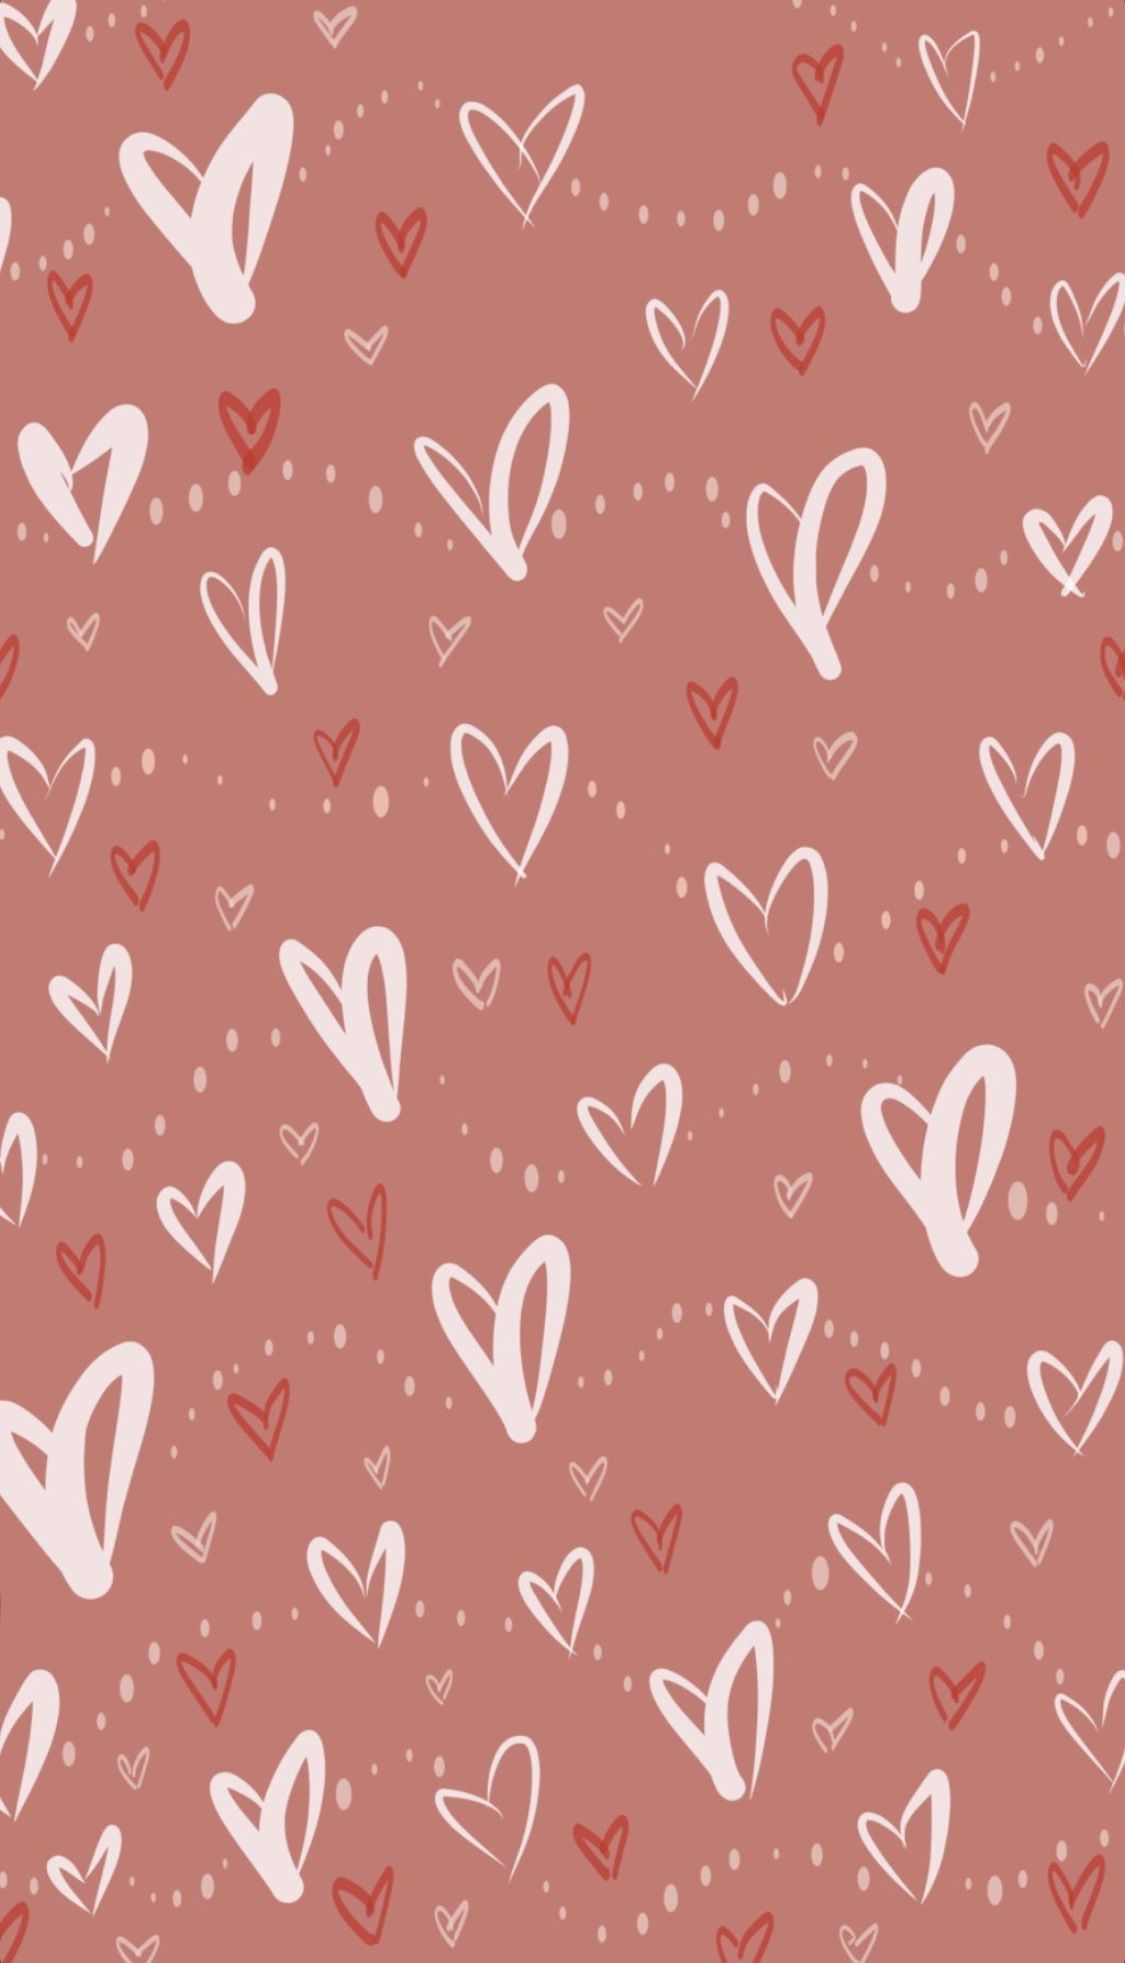 Valentines wallpaper iphone .com